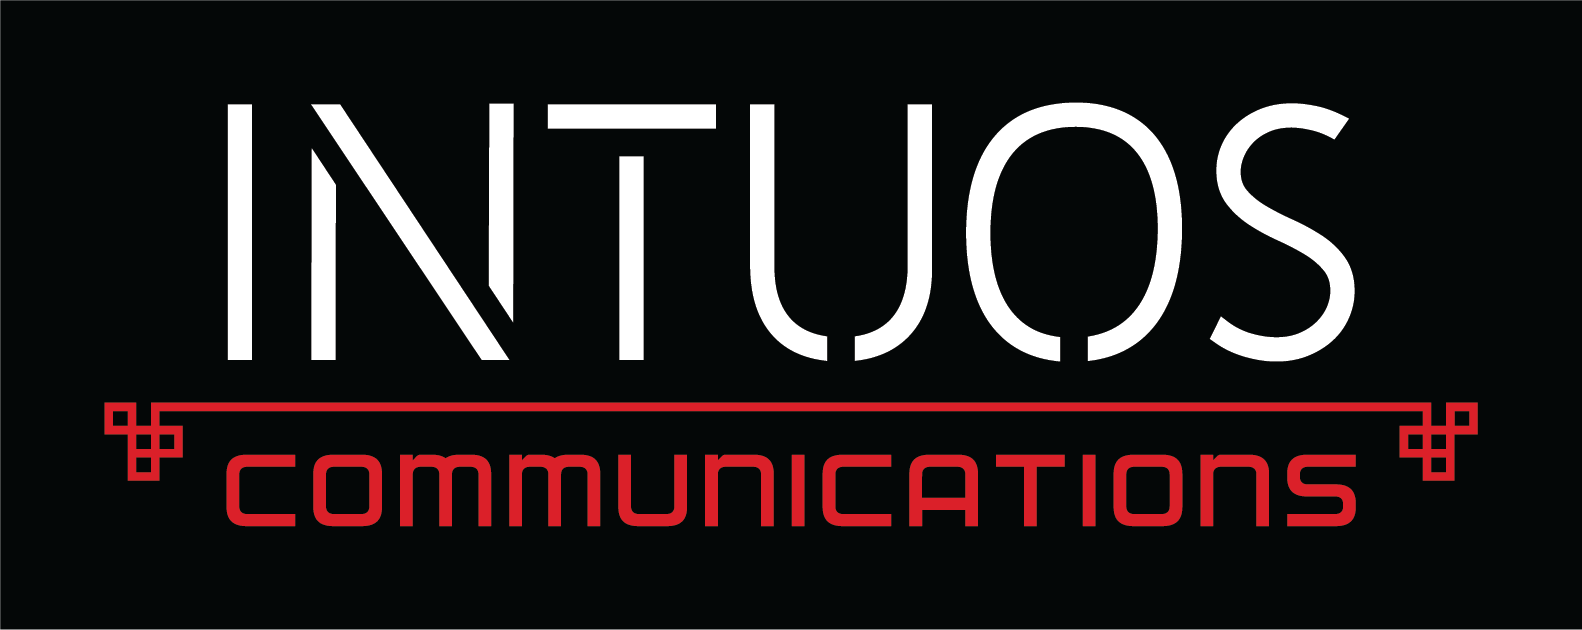 Intuos Communications